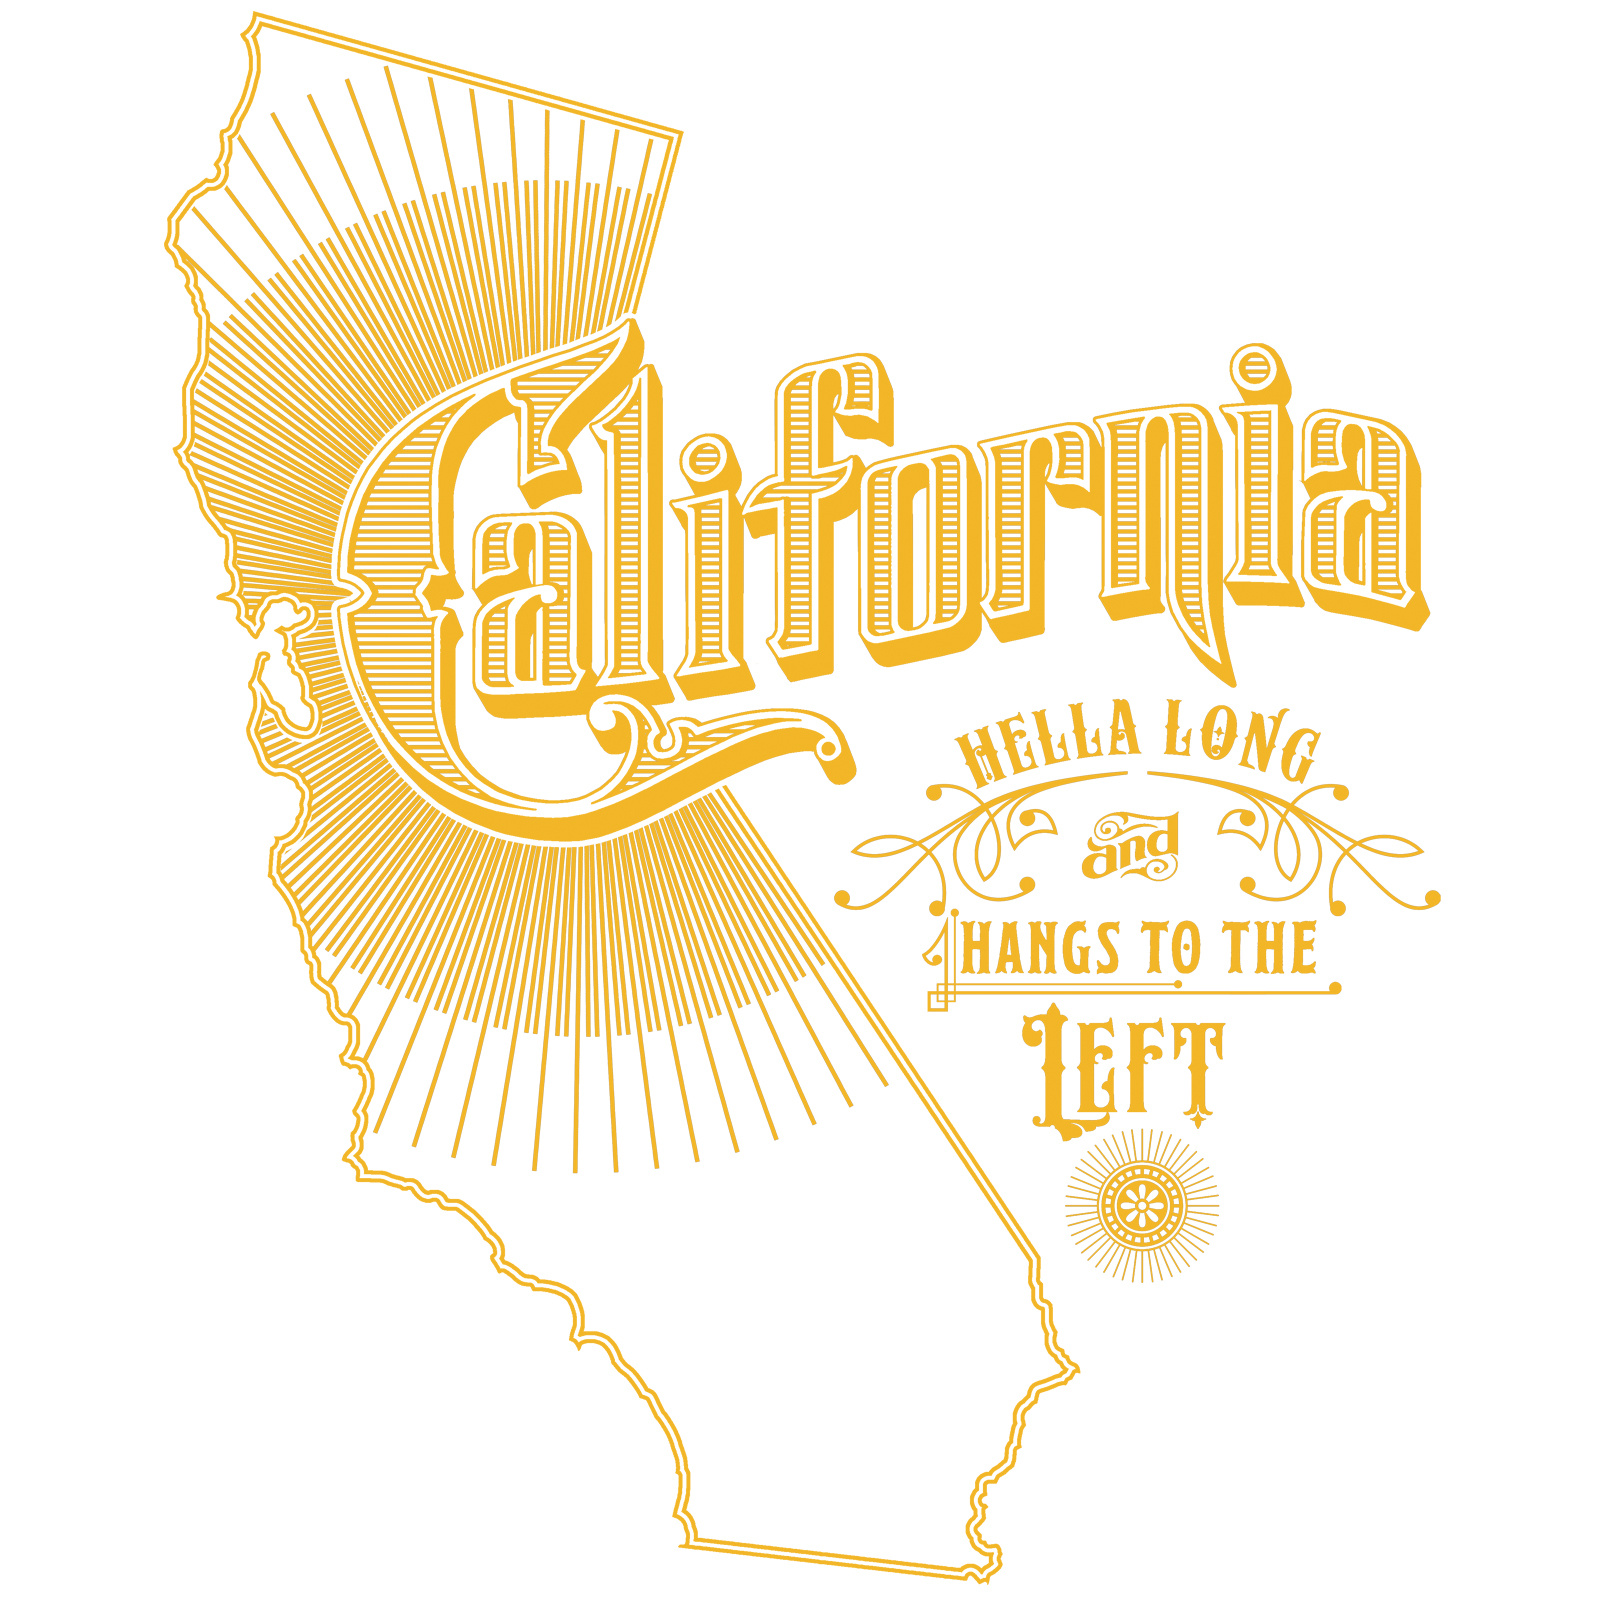 Vintage Graphic California Unisex Tee